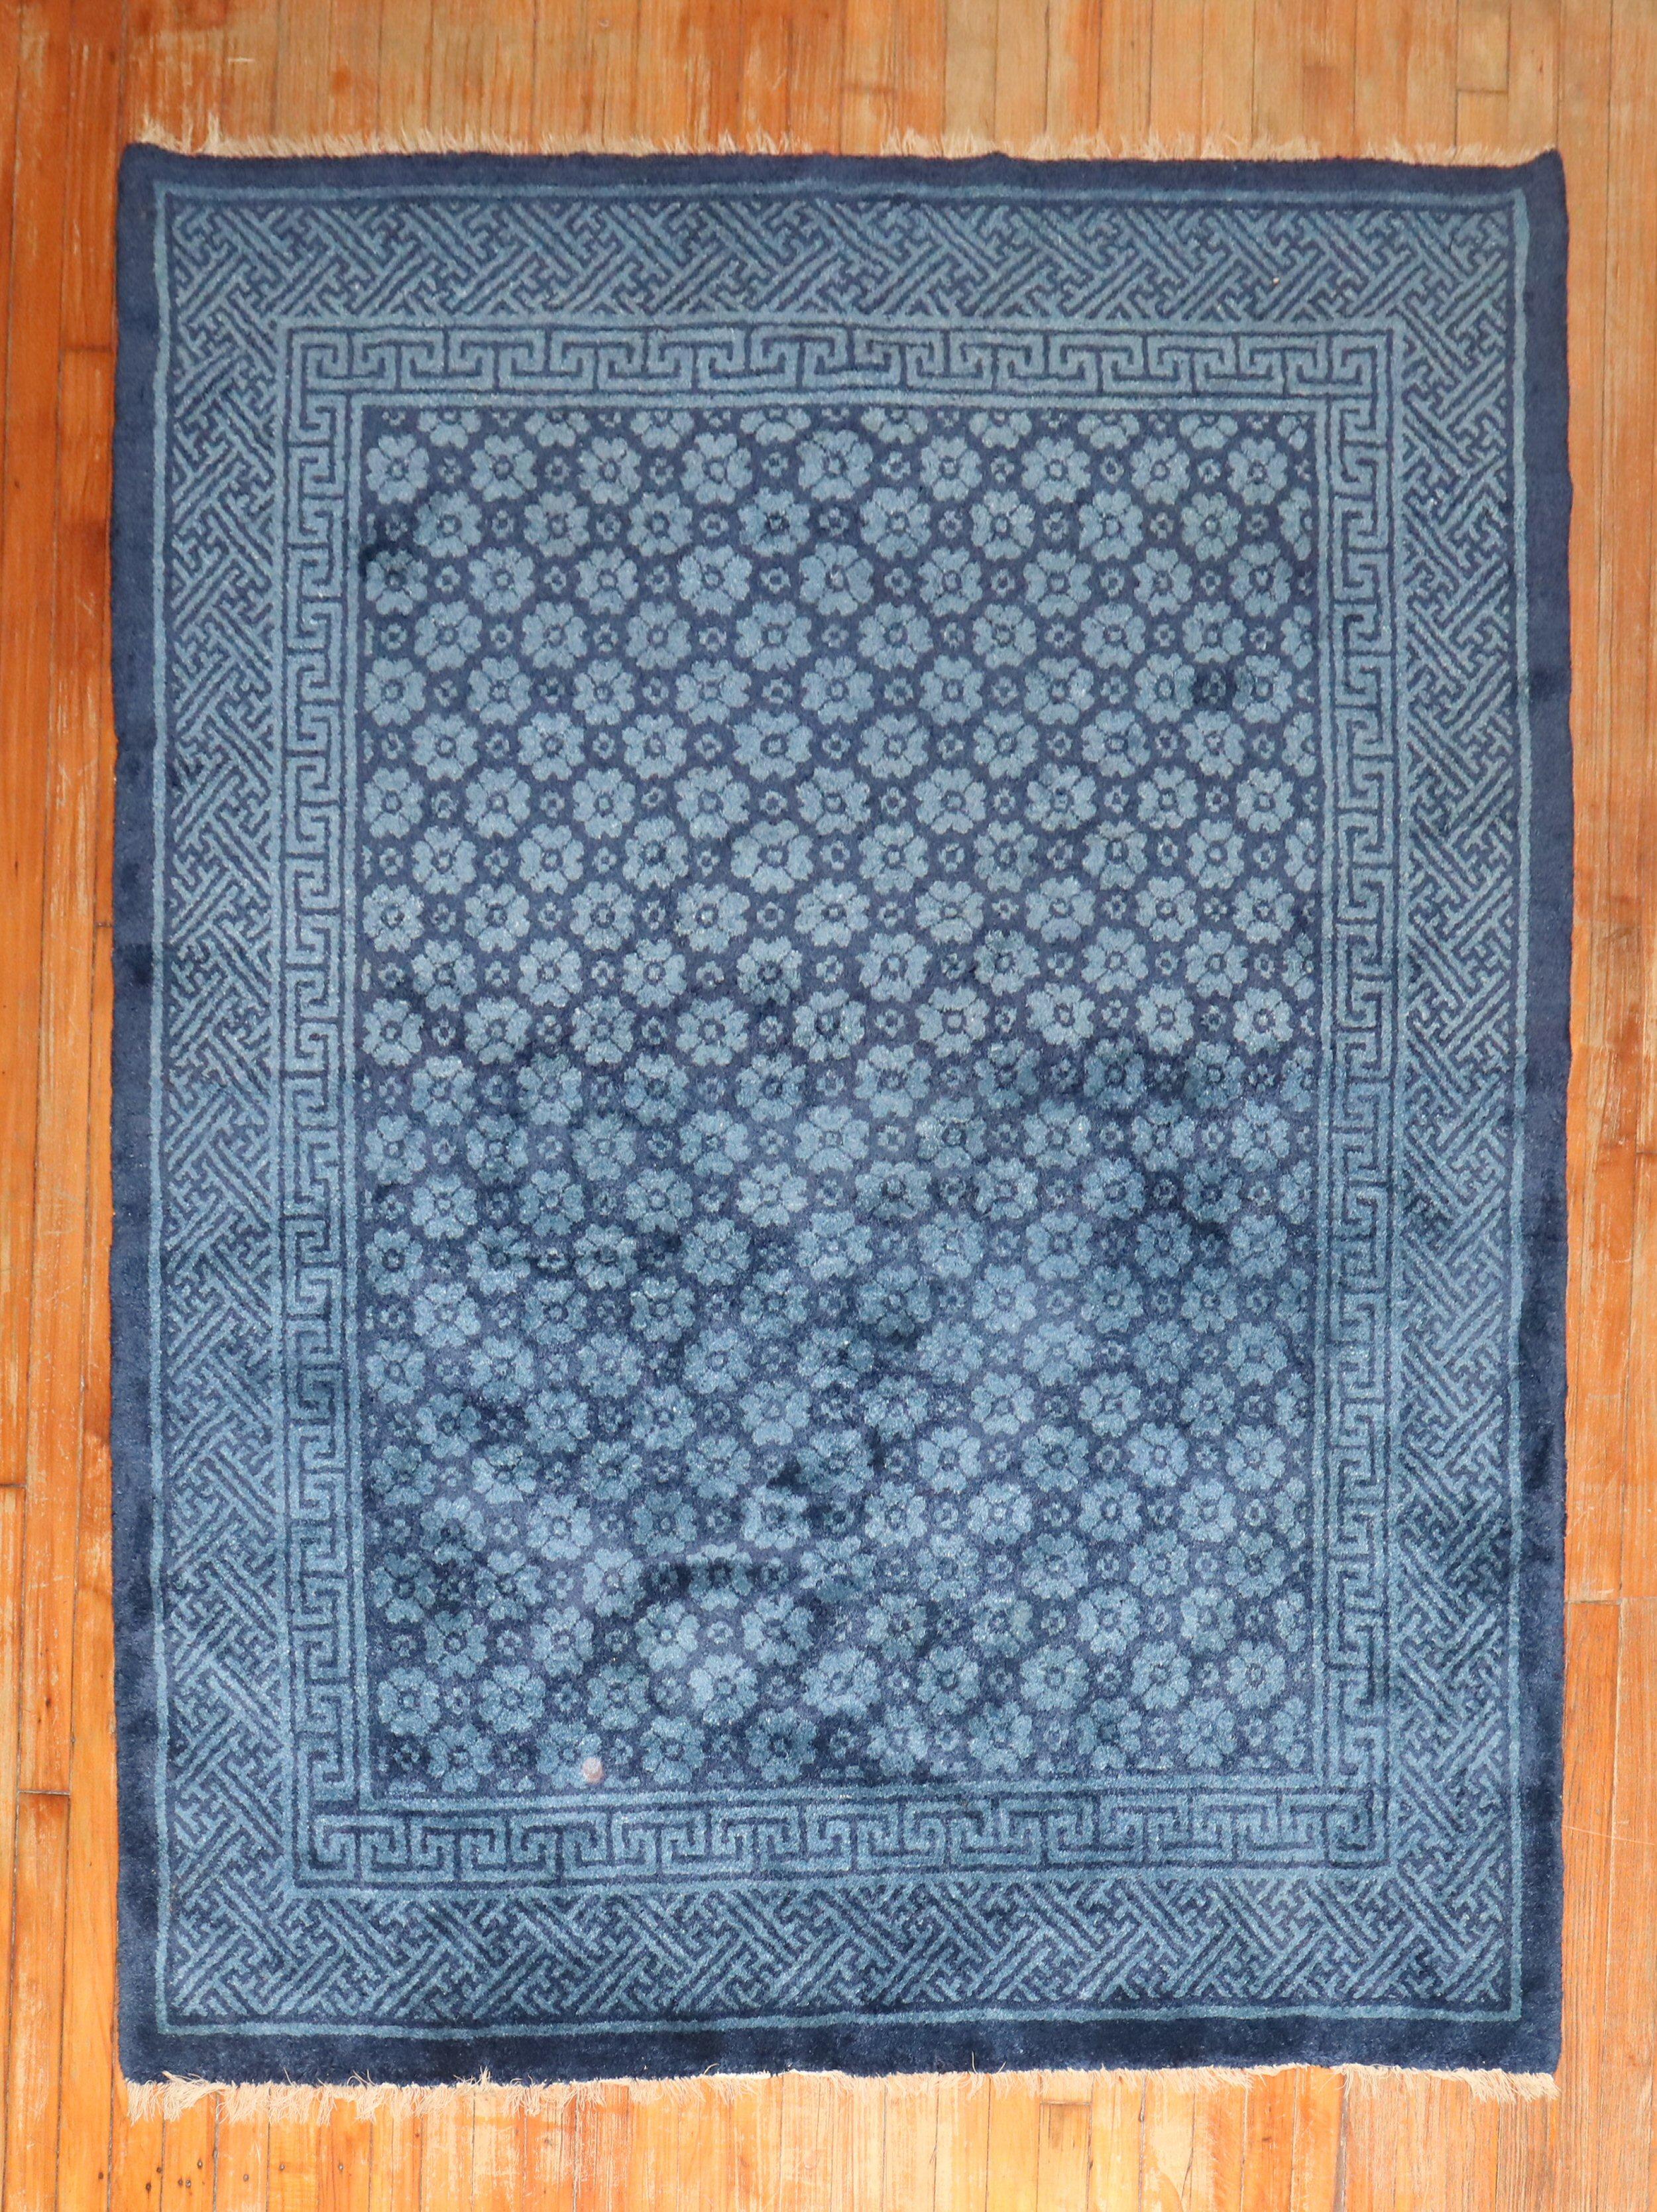 
A 2nd quarter of the 20th century blue Tibetan Plush Pile Rug

Measures: 5'4